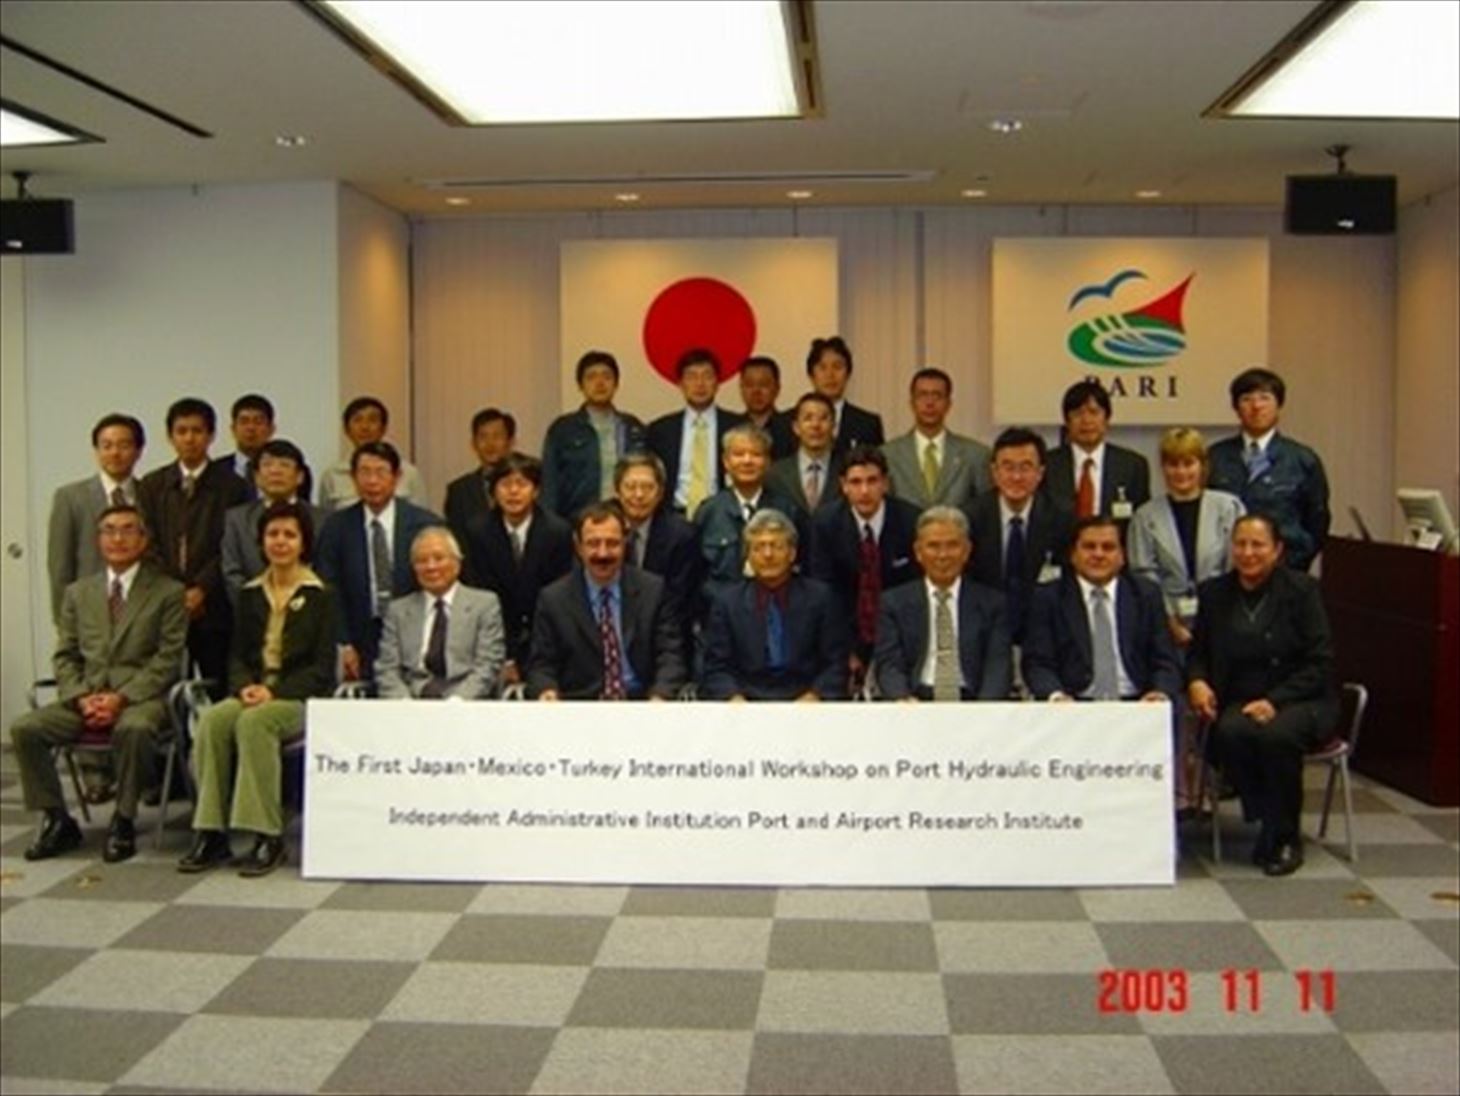 Photo 8: Japan-Mexico-Turkey Port Hydraulics Research Workshop (November 2003)